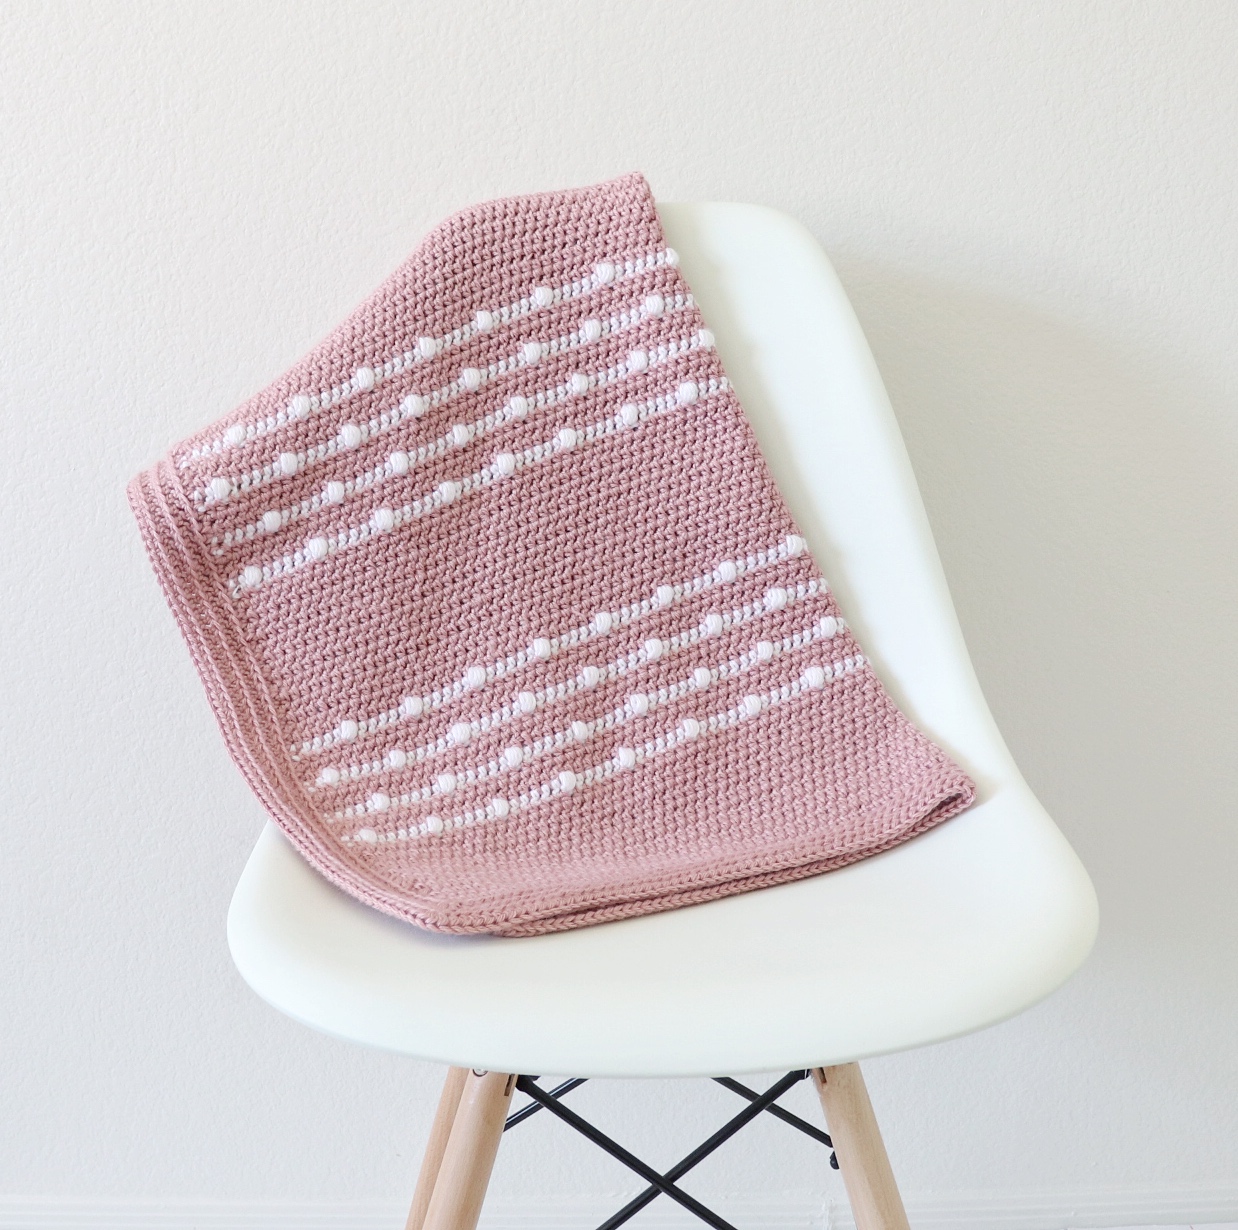 20 Crochet Baby Blankets with Caron Simply Soft - Daisy Farm Crafts